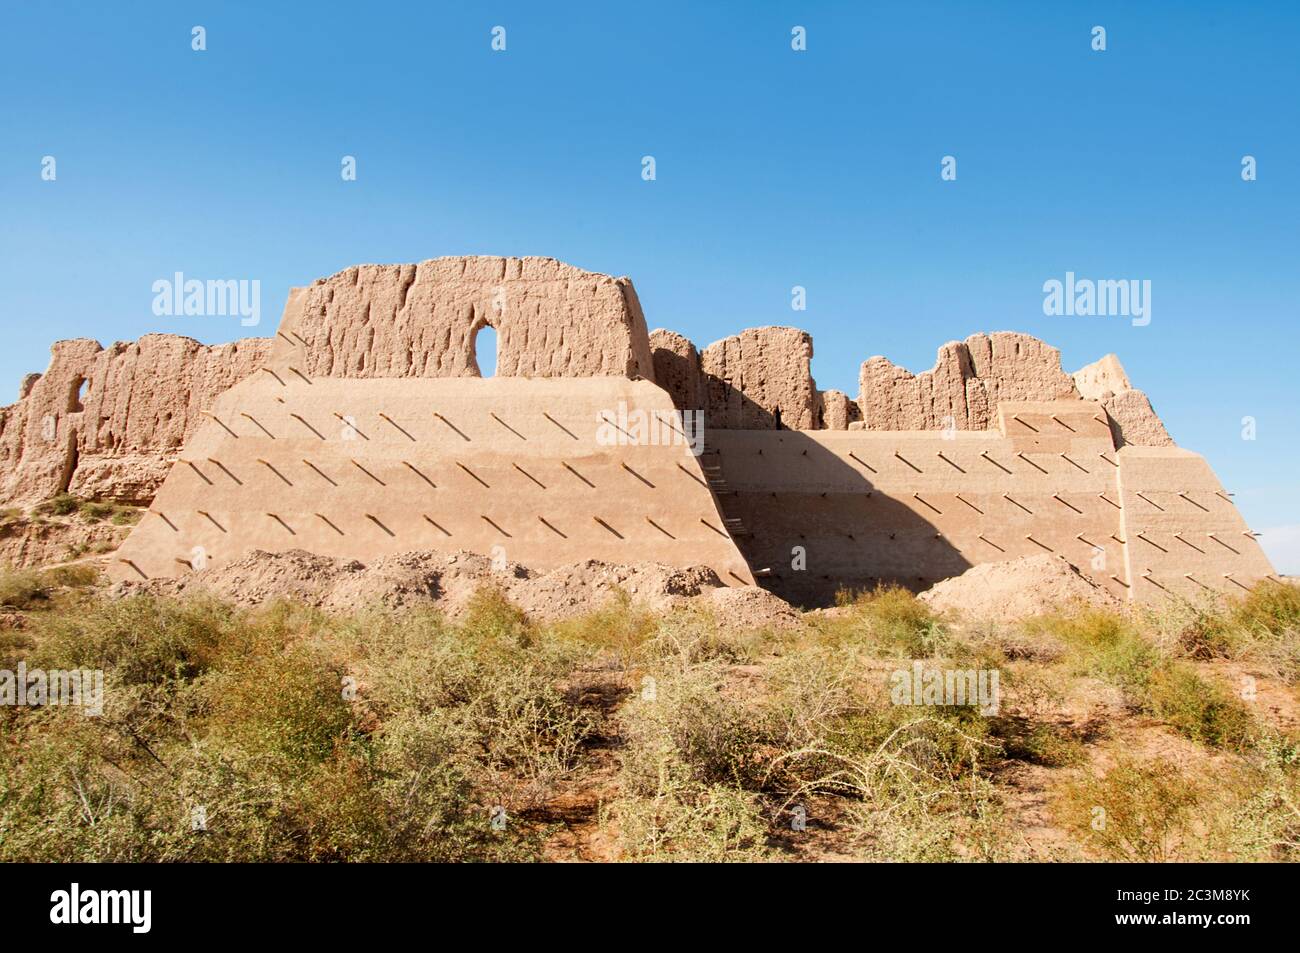 Kyzyl-kala fortress ancient Khorezm in the Kyzylkum desert, Uzbekistan Stock Photo